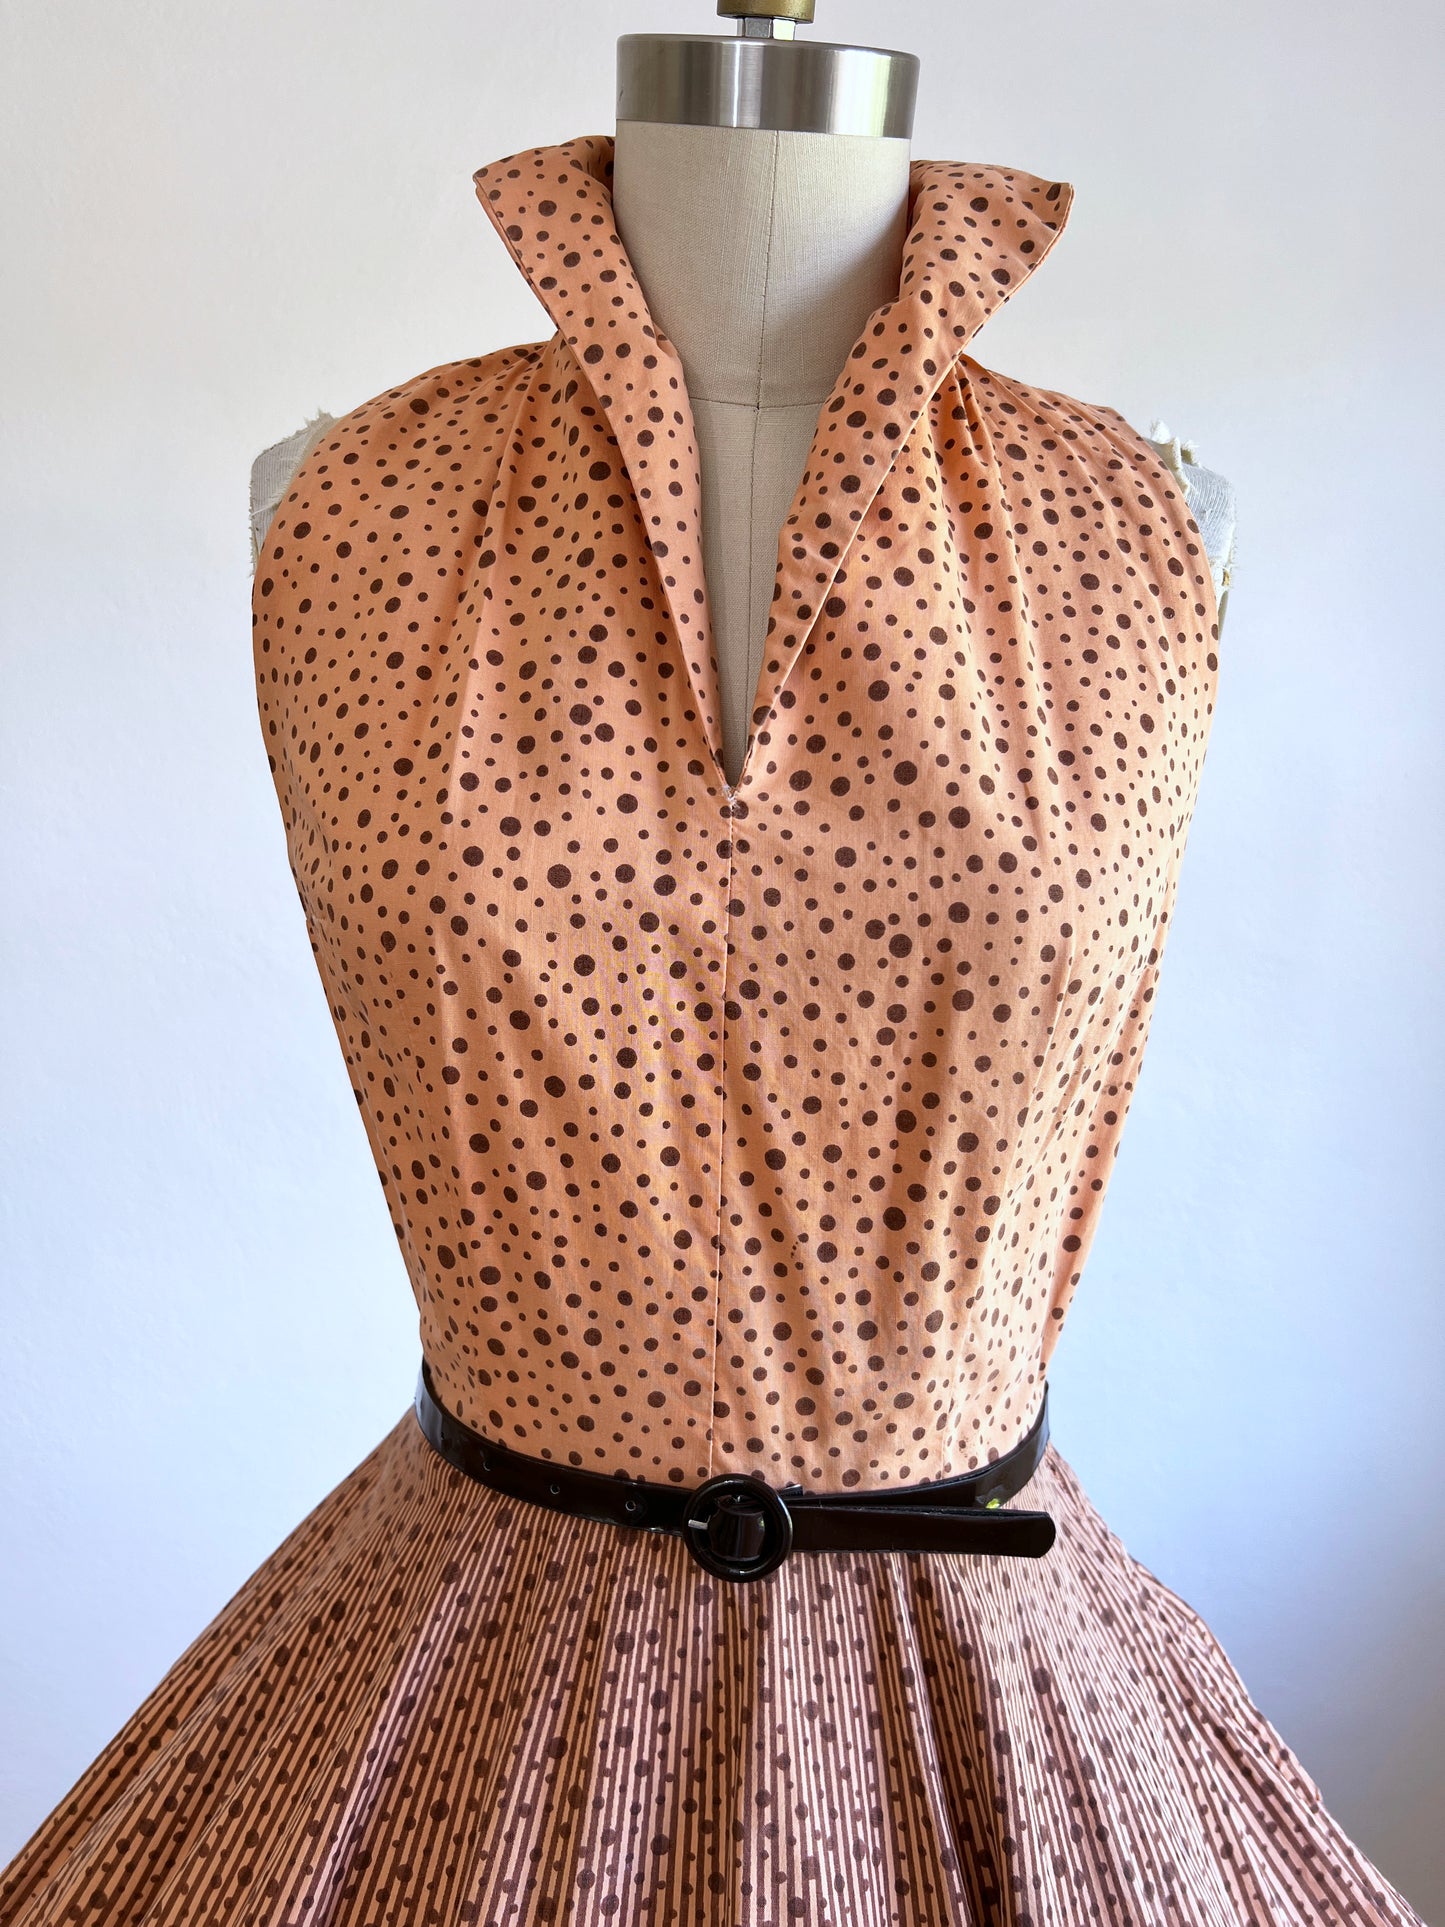 Vintage 1950s Dress - AMAZING Polka Dot + Graphic Stripe Peach & Cocoa Cotton Circle Skirt Sundress Size S